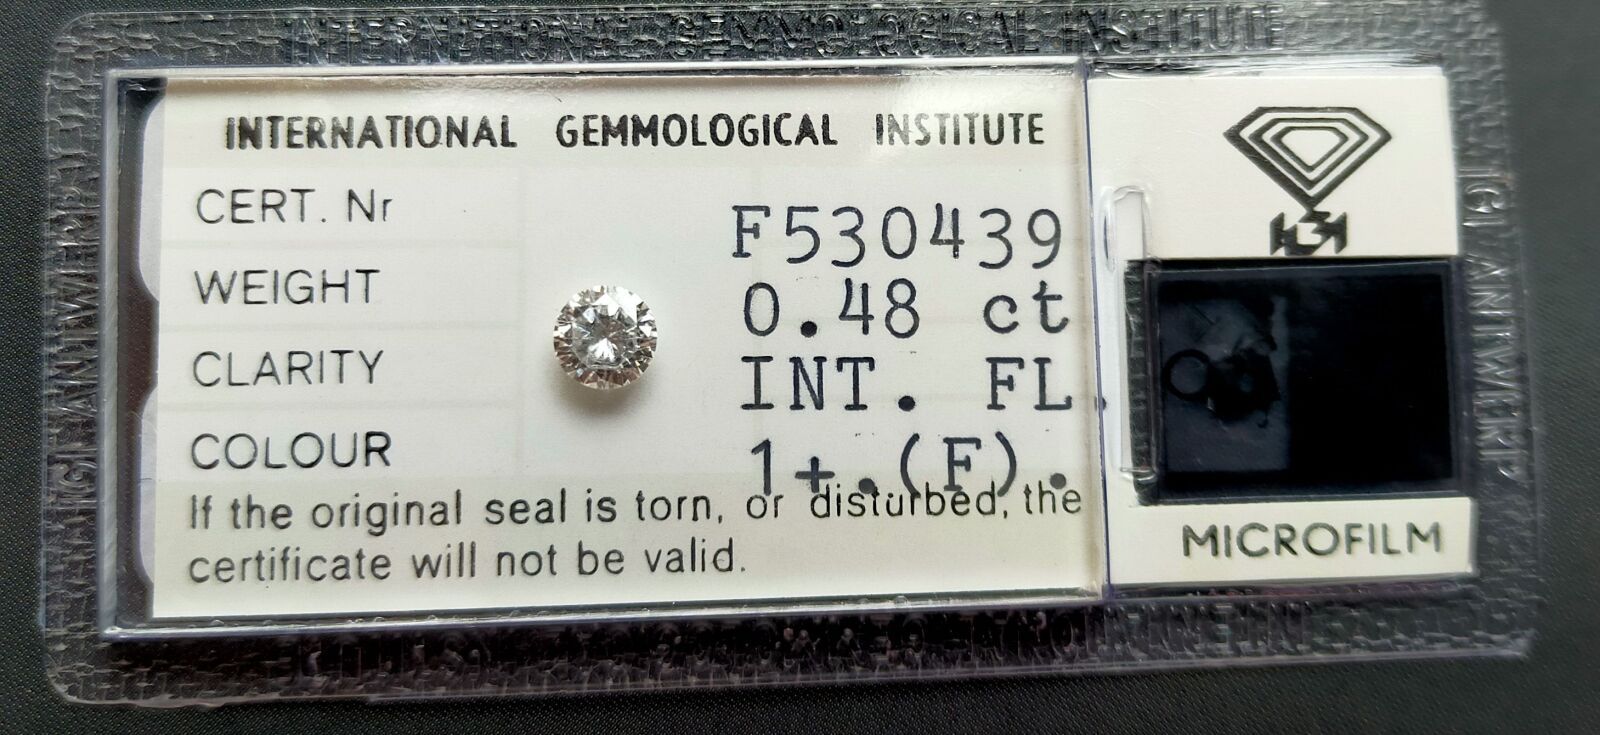 Null 塑料中的圆形明亮式切割钻石。伴随着1979年5月25日IGI n°F530439的钻石证书，注明了:
- 质量：0.48克拉 
- 颜色：F
- 明确&hellip;